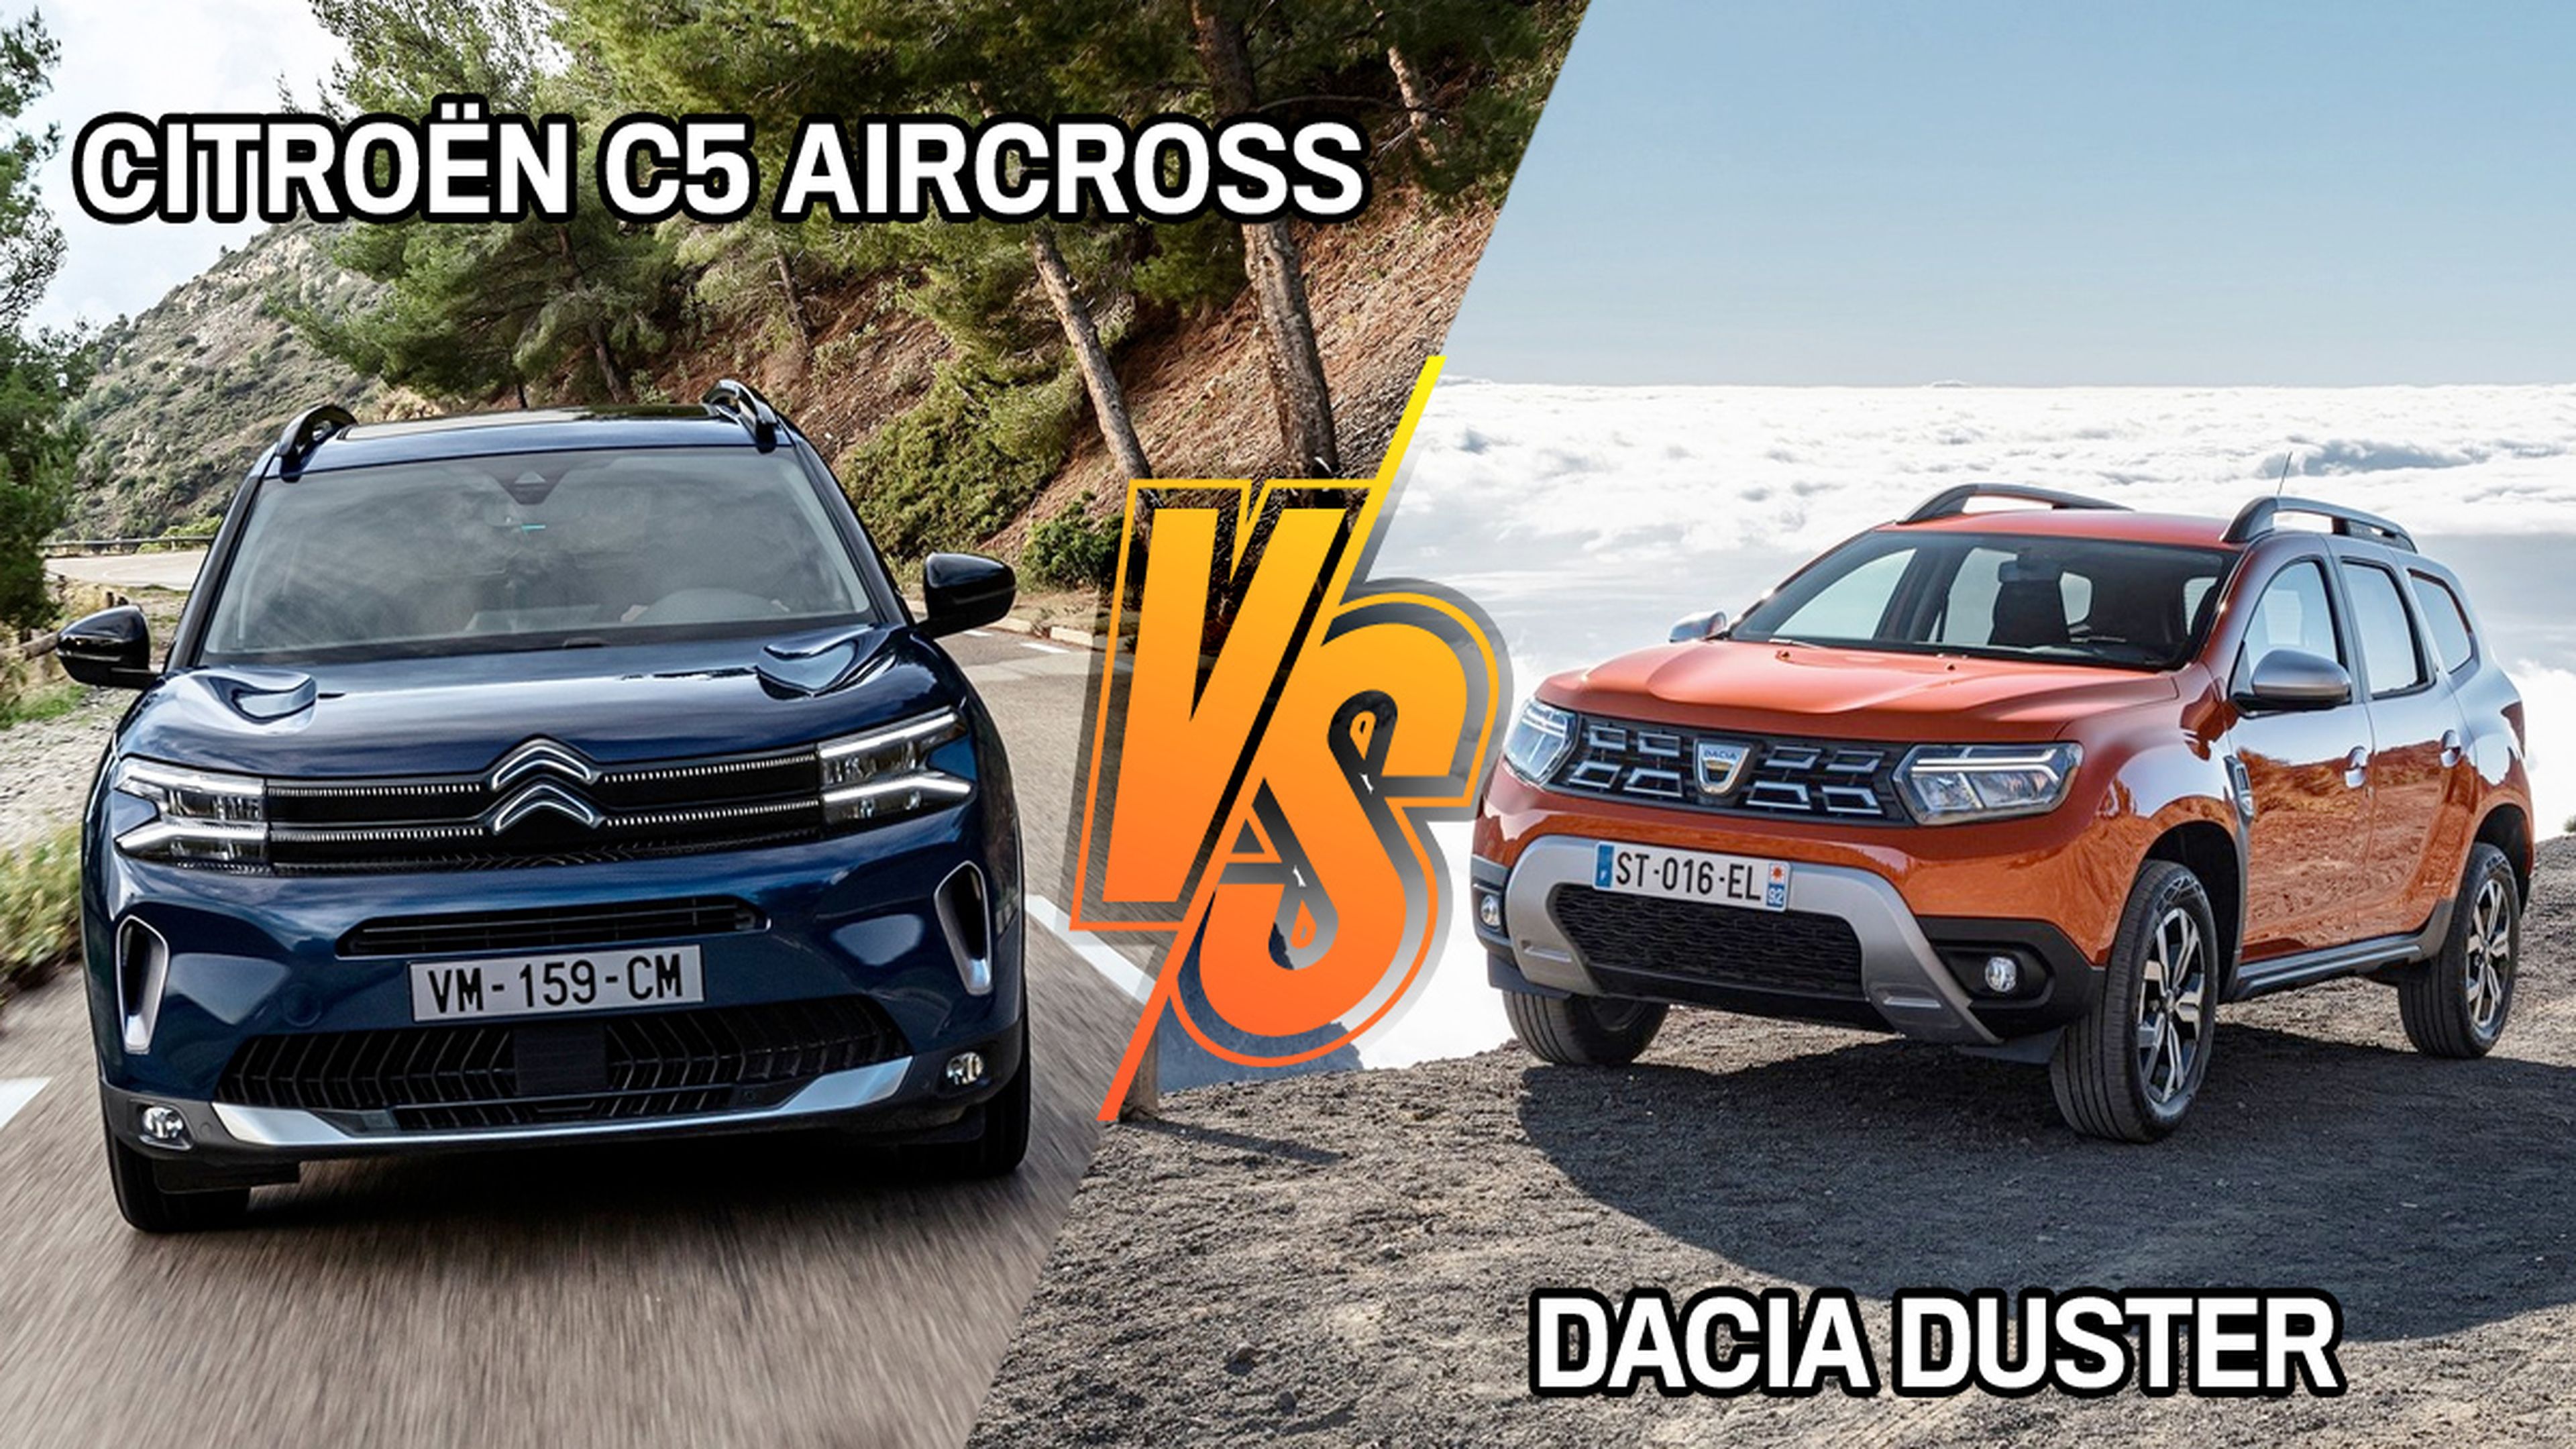 Citroën C5 Aircross o Dacia Duster 2023, ¿cuál es mejor?